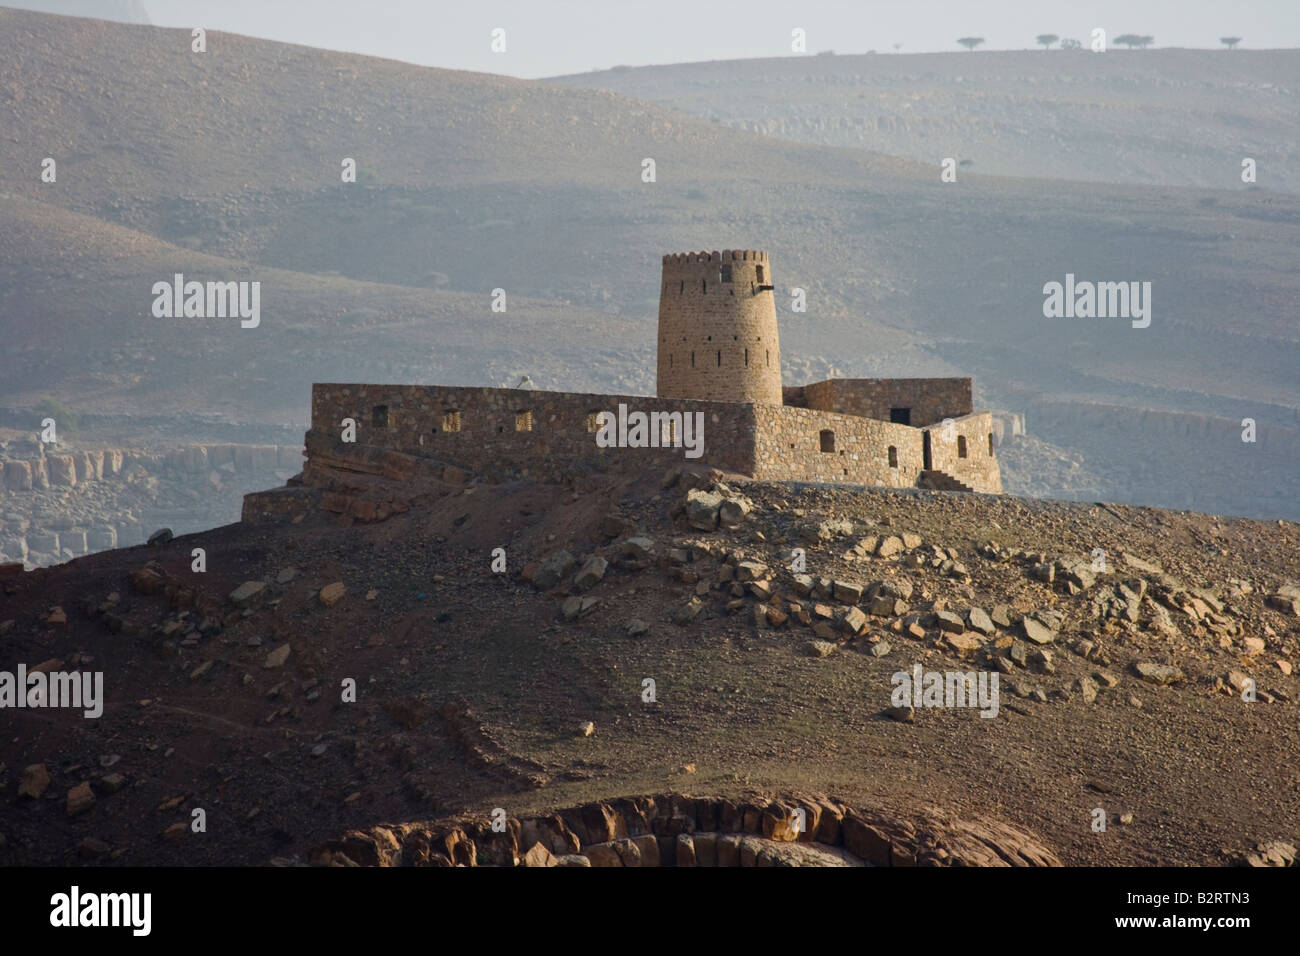 Bukha Fort on the Musandam Peninsula in Oman Stock Photo